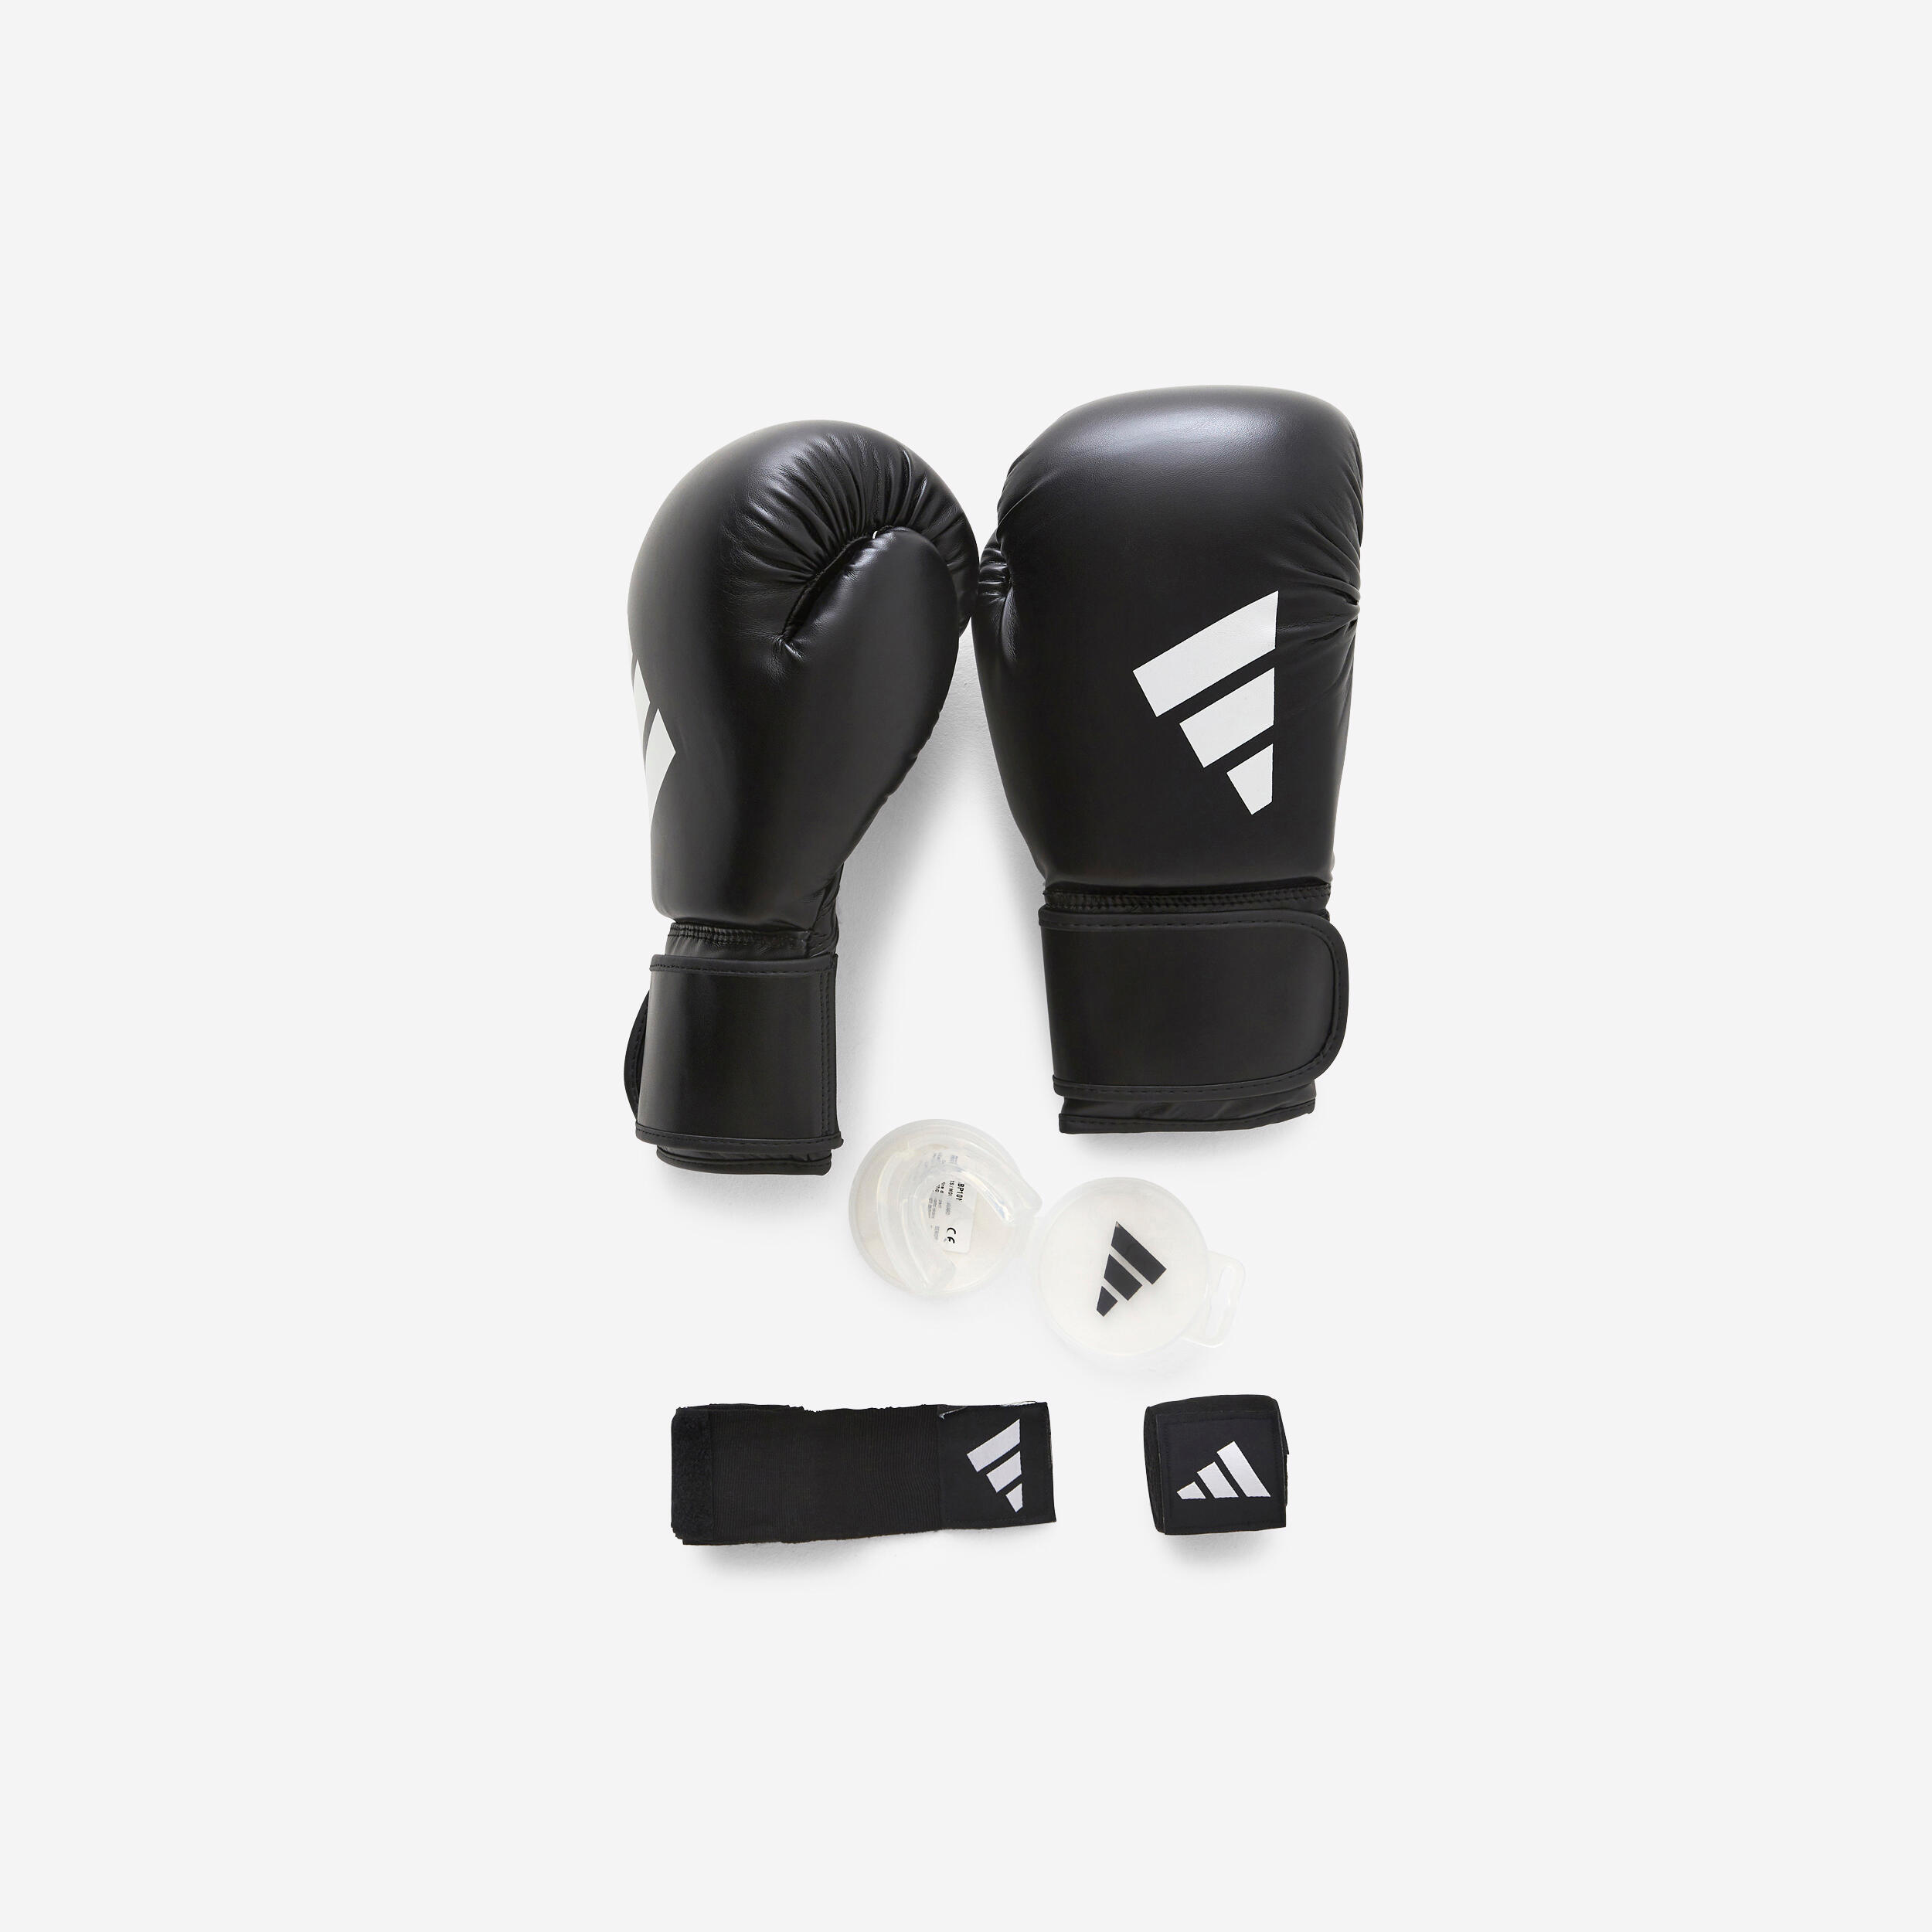 ADIDAS Boxing Kit V2 (Gloves+Wraps+Mouthguard)